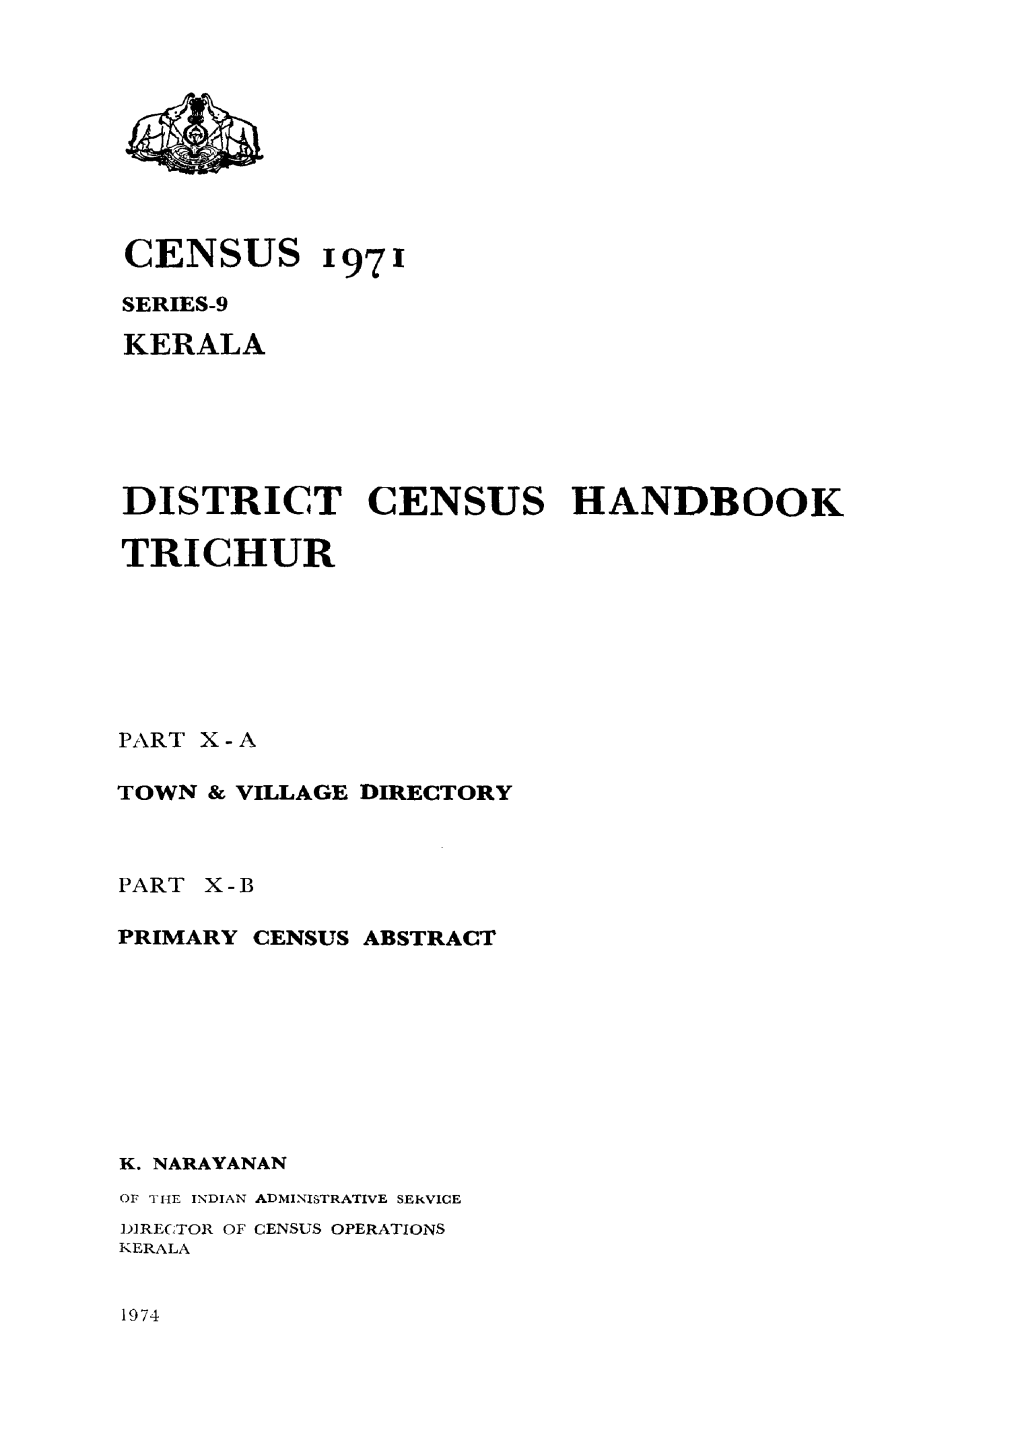 District Census Handbook, Trichur, Part X-A, XB, Series-9